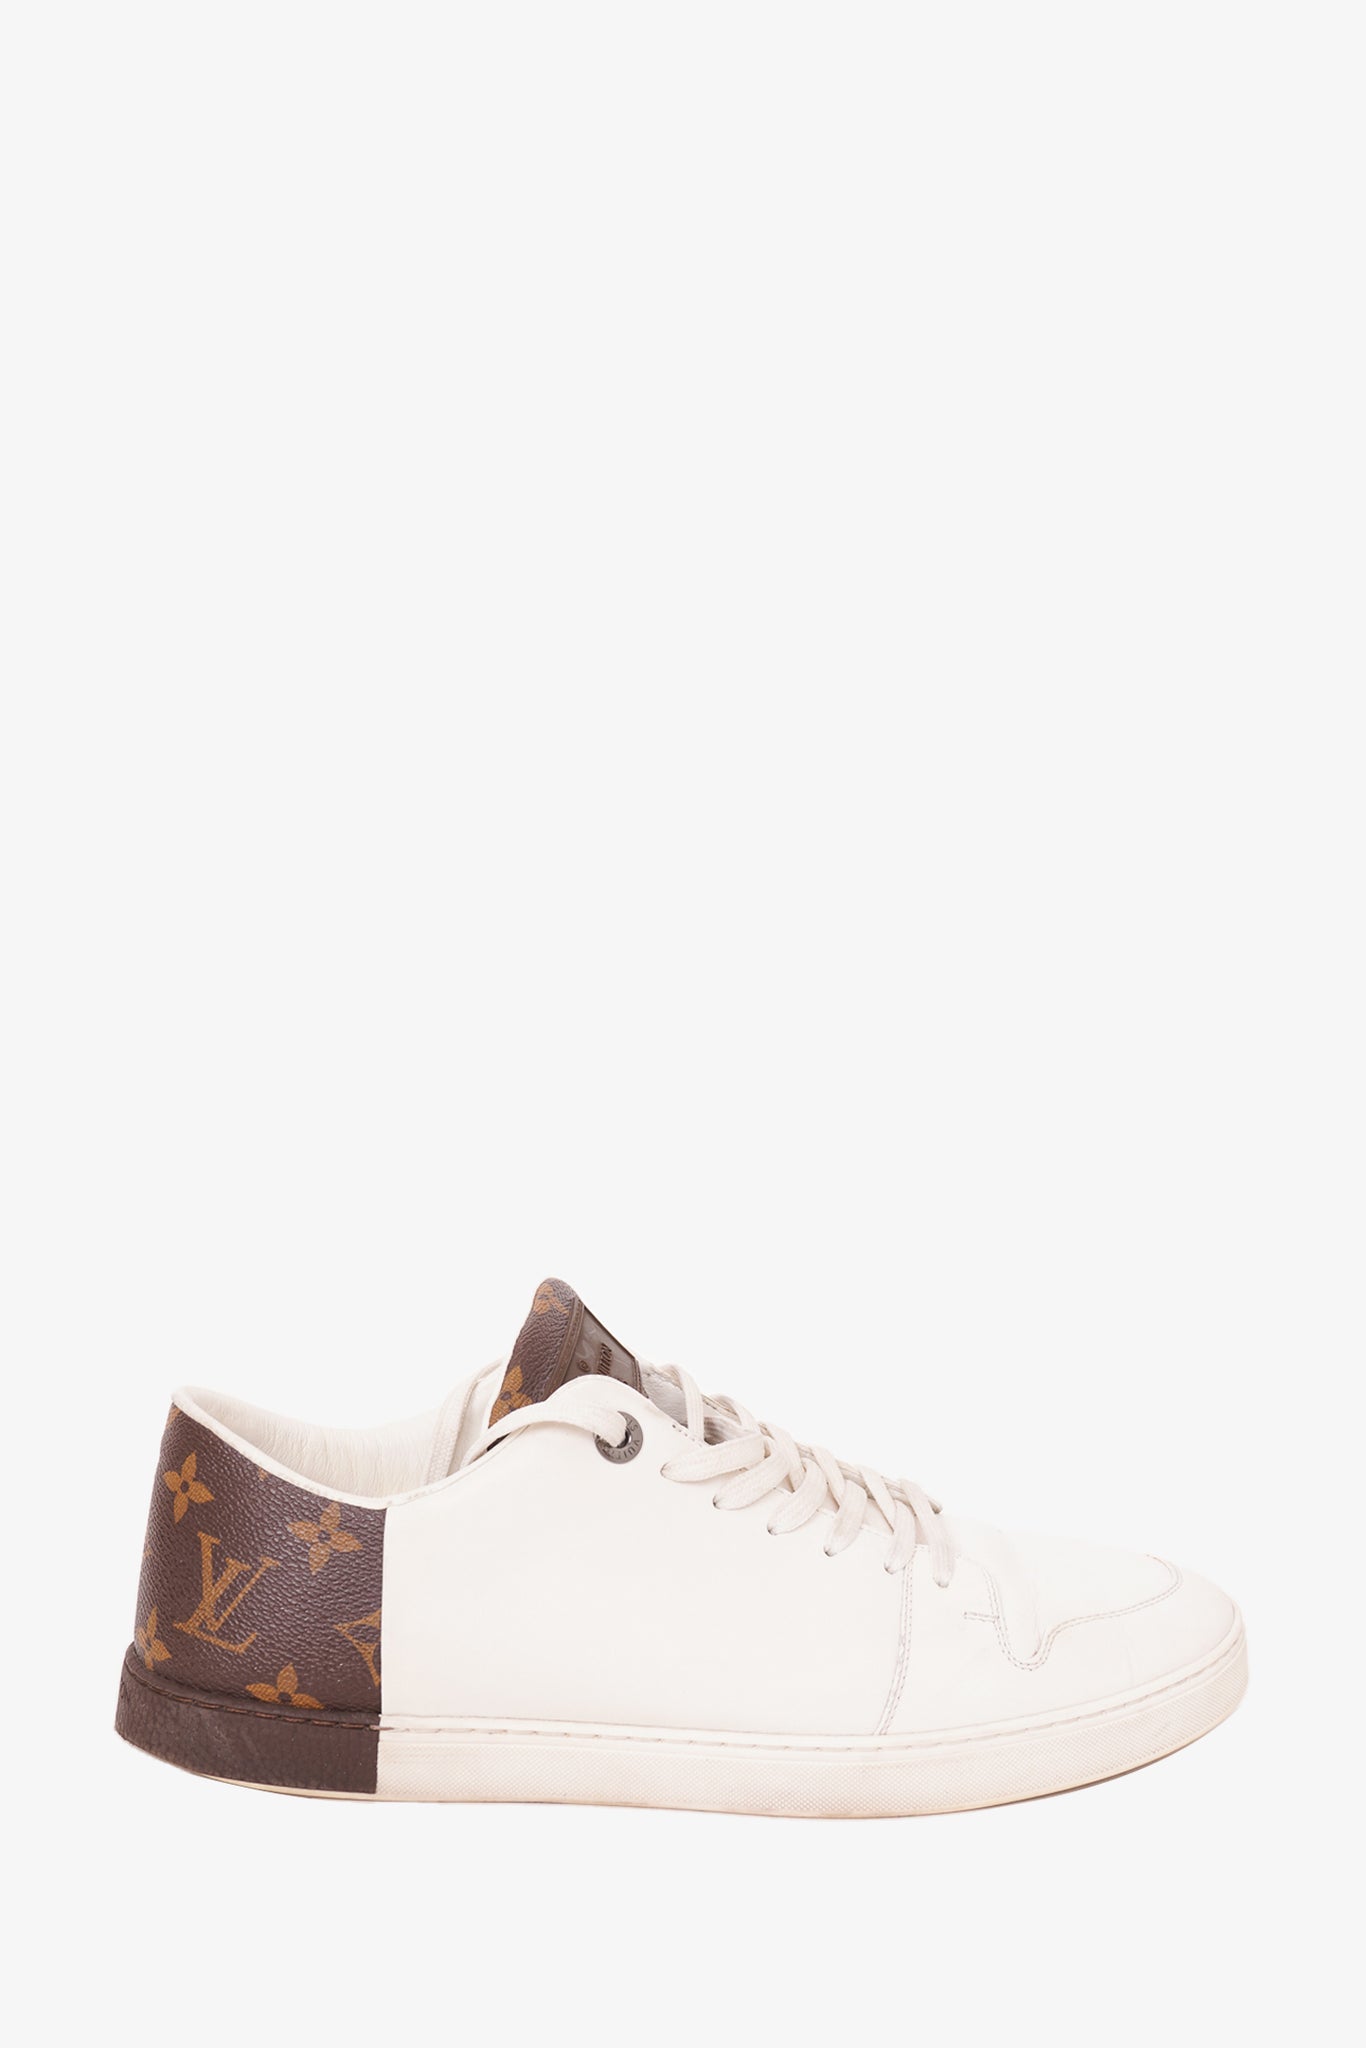 Louis Vuitton Brown/Orange Monogram 'Catogram Stellar' High Top Sneakers sz  42